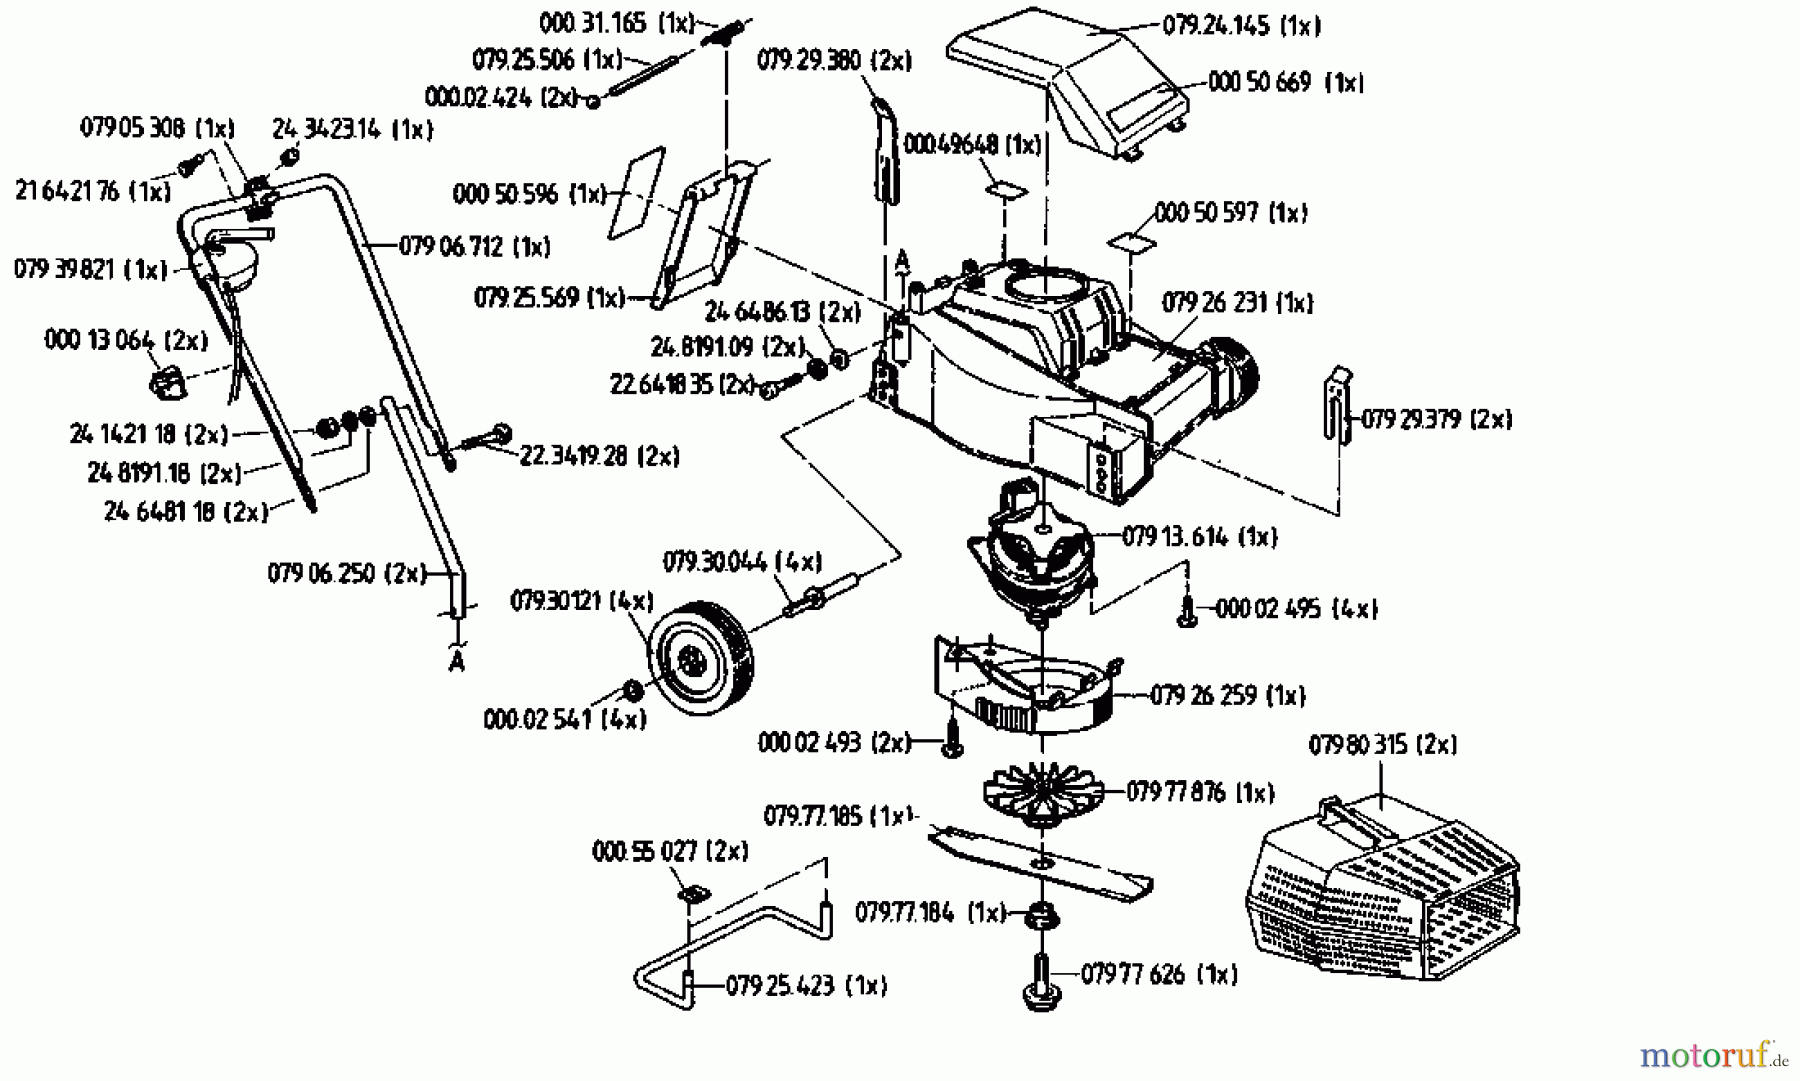  Golf Electric mower Junior 02810.02  (1993) Basic machine